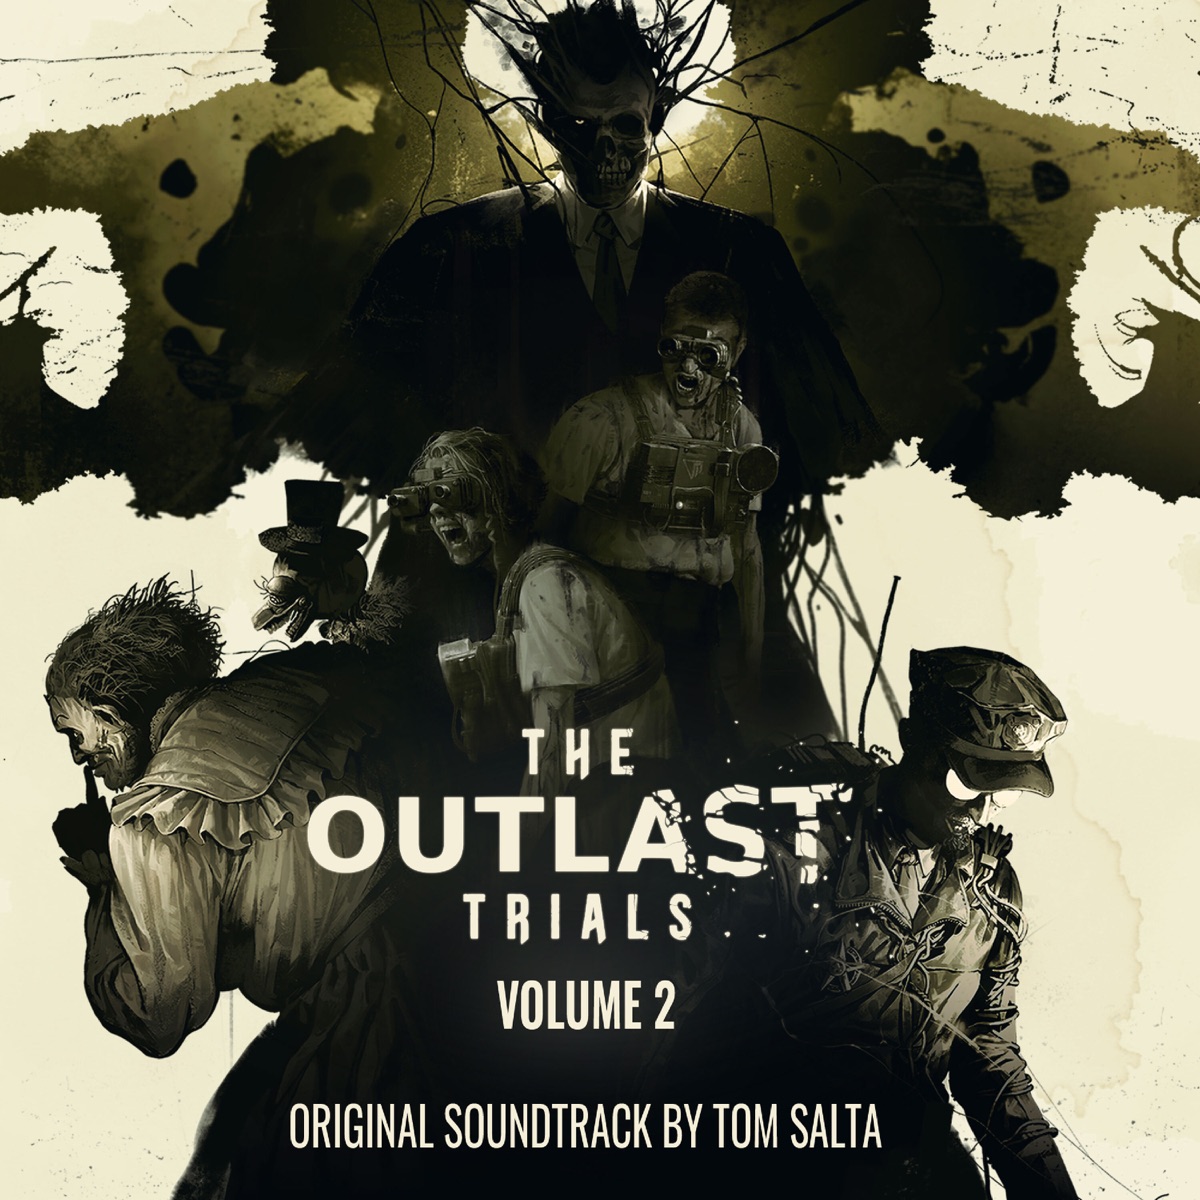 The Outlast Trials: Vol 2. (Original Soundtrack) - Album by Tom Salta - Apple Music